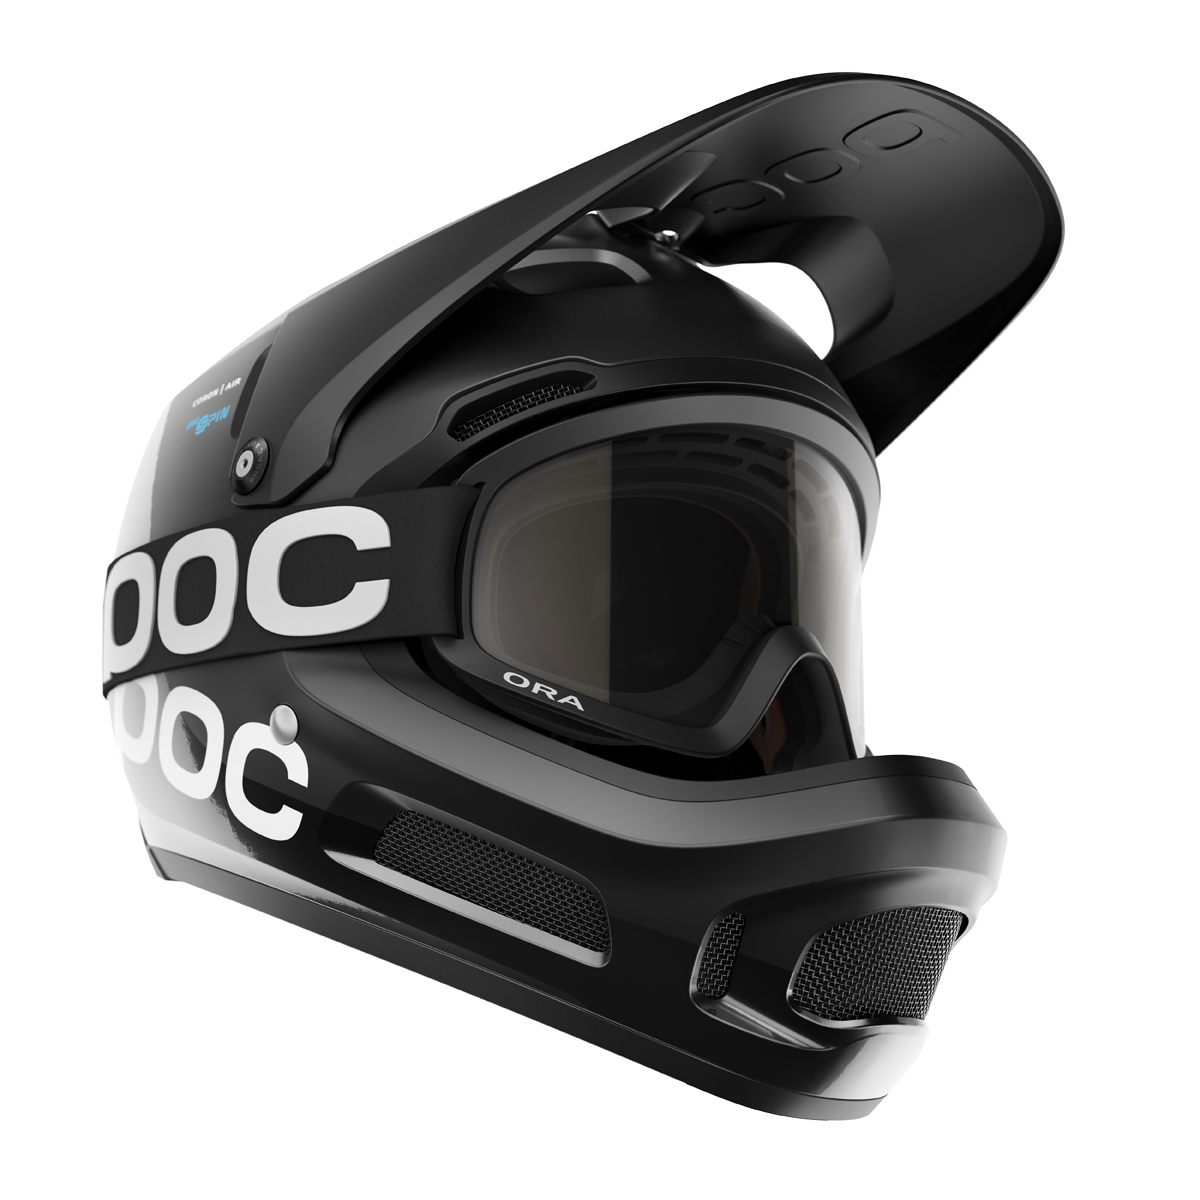 POC takes on DH & Enduro w/ multi-impact Coron Air Carbon Spin full face helmet